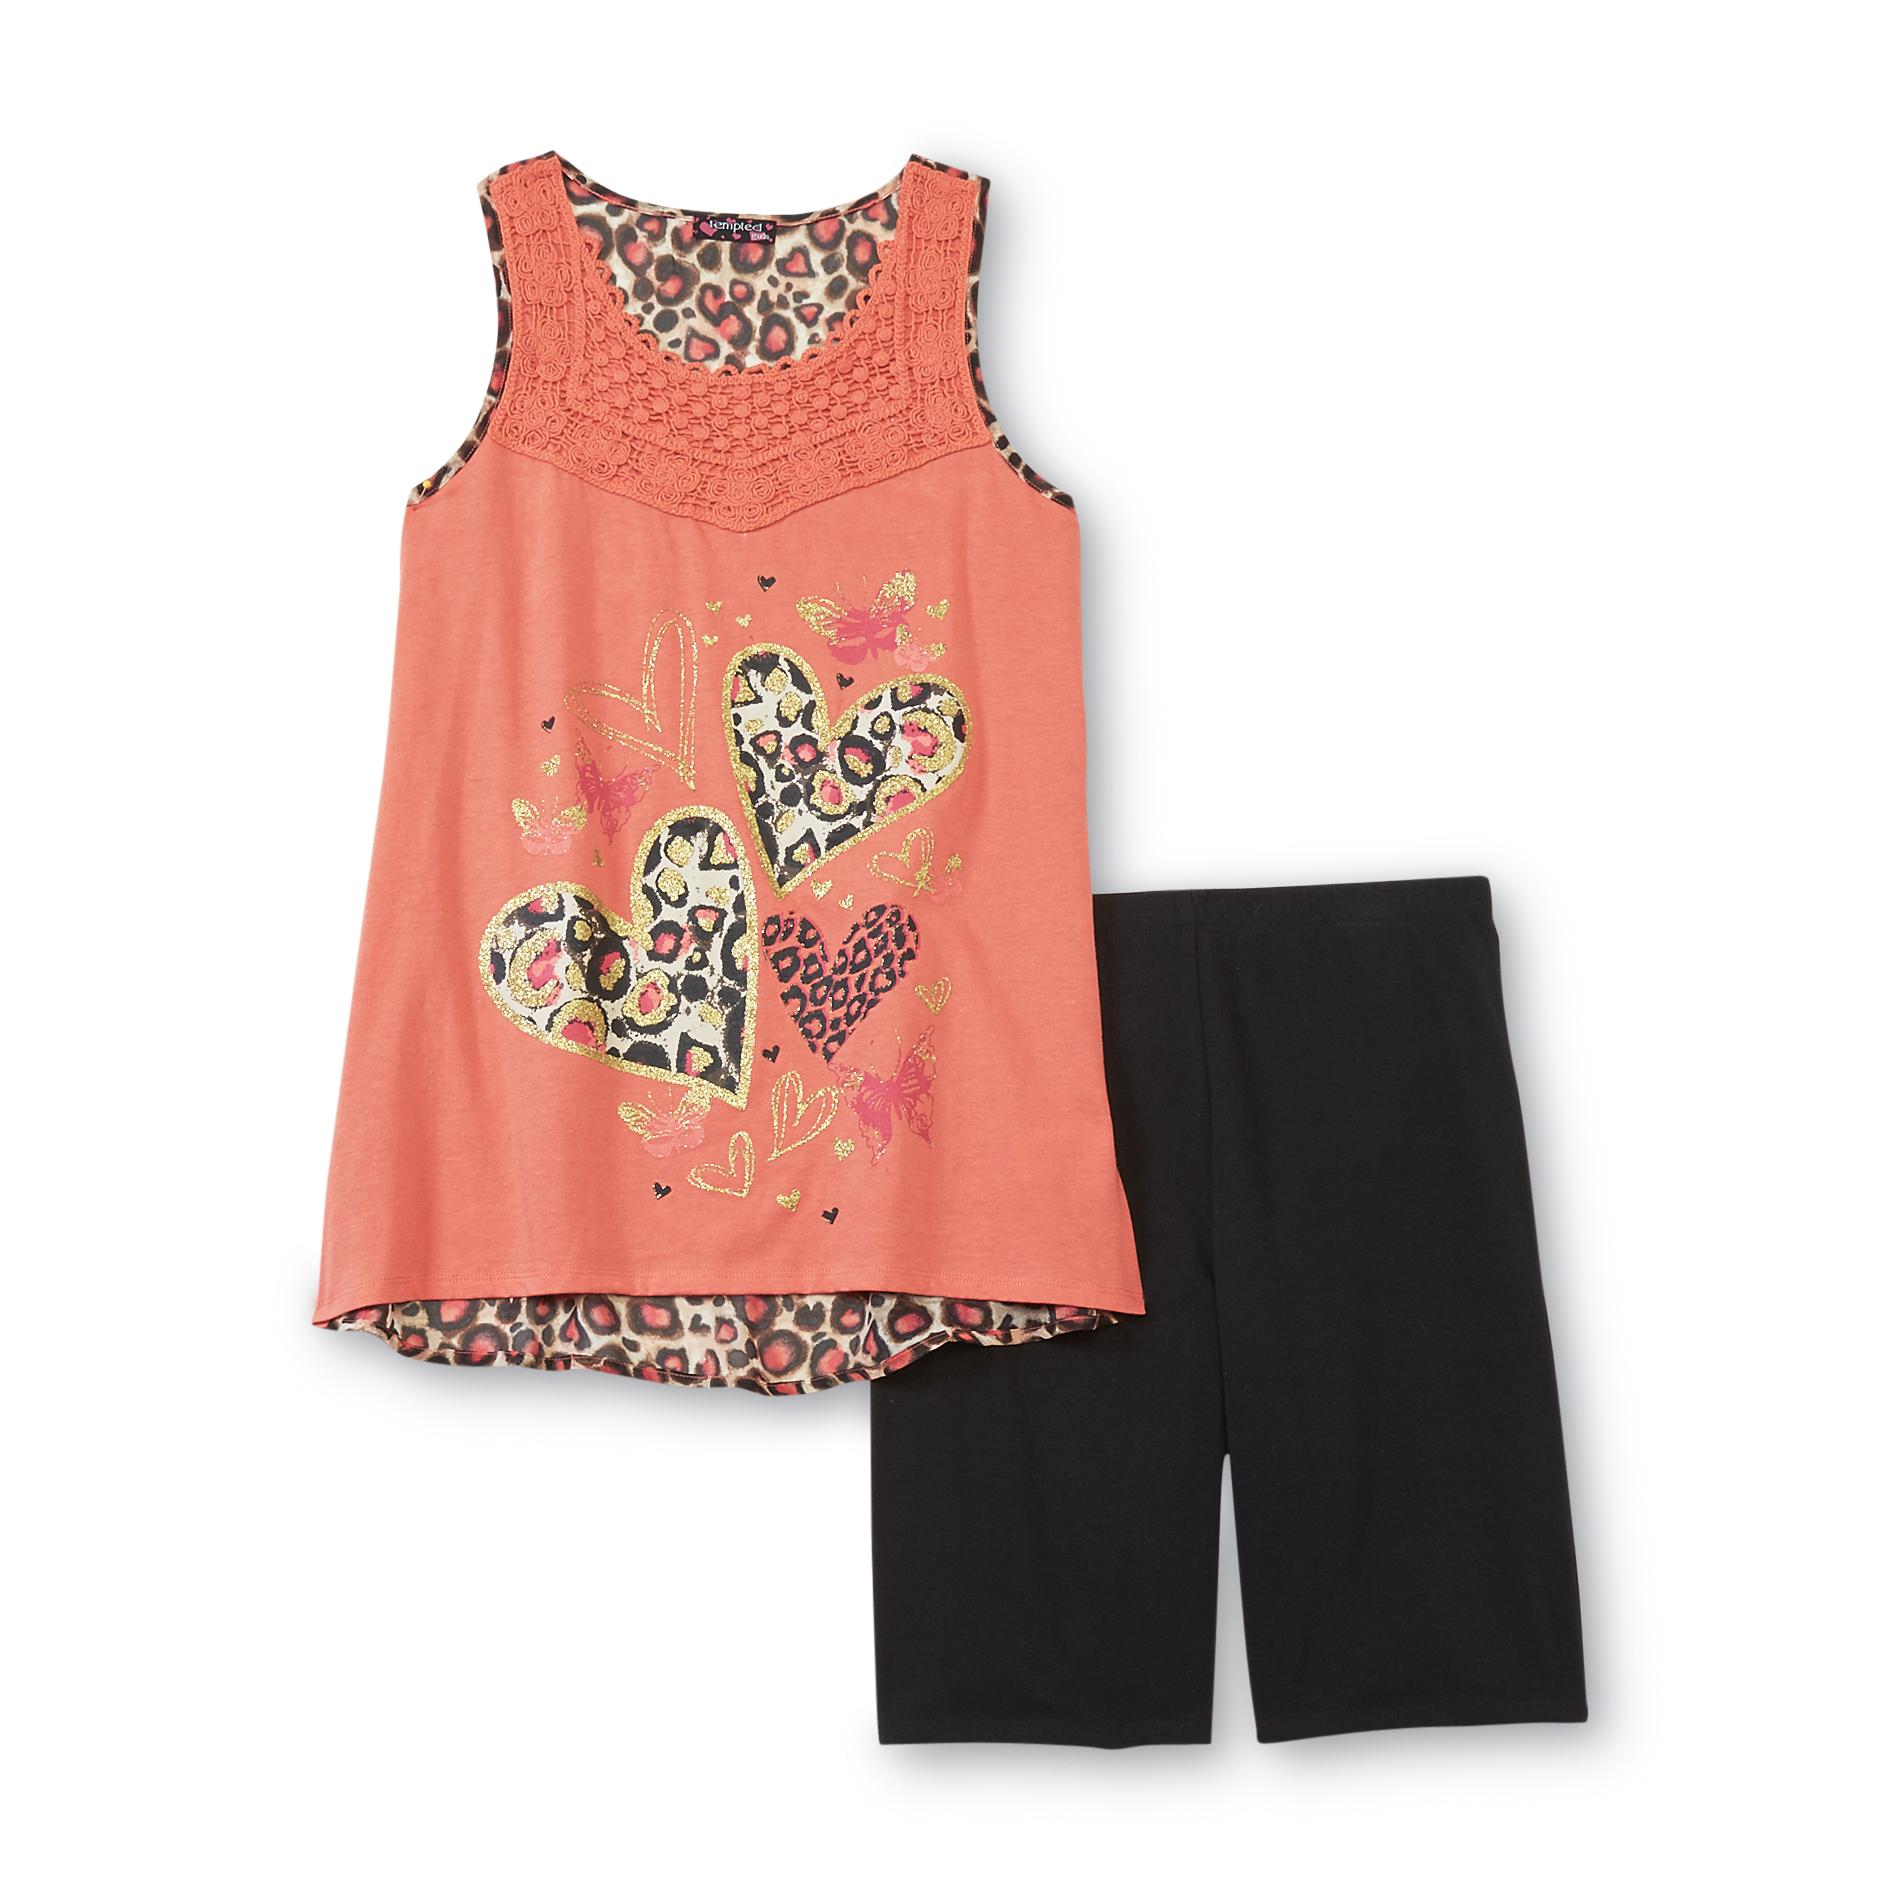 Tempted Apparel Girl's Tank Top & Shorts - Leopard Print